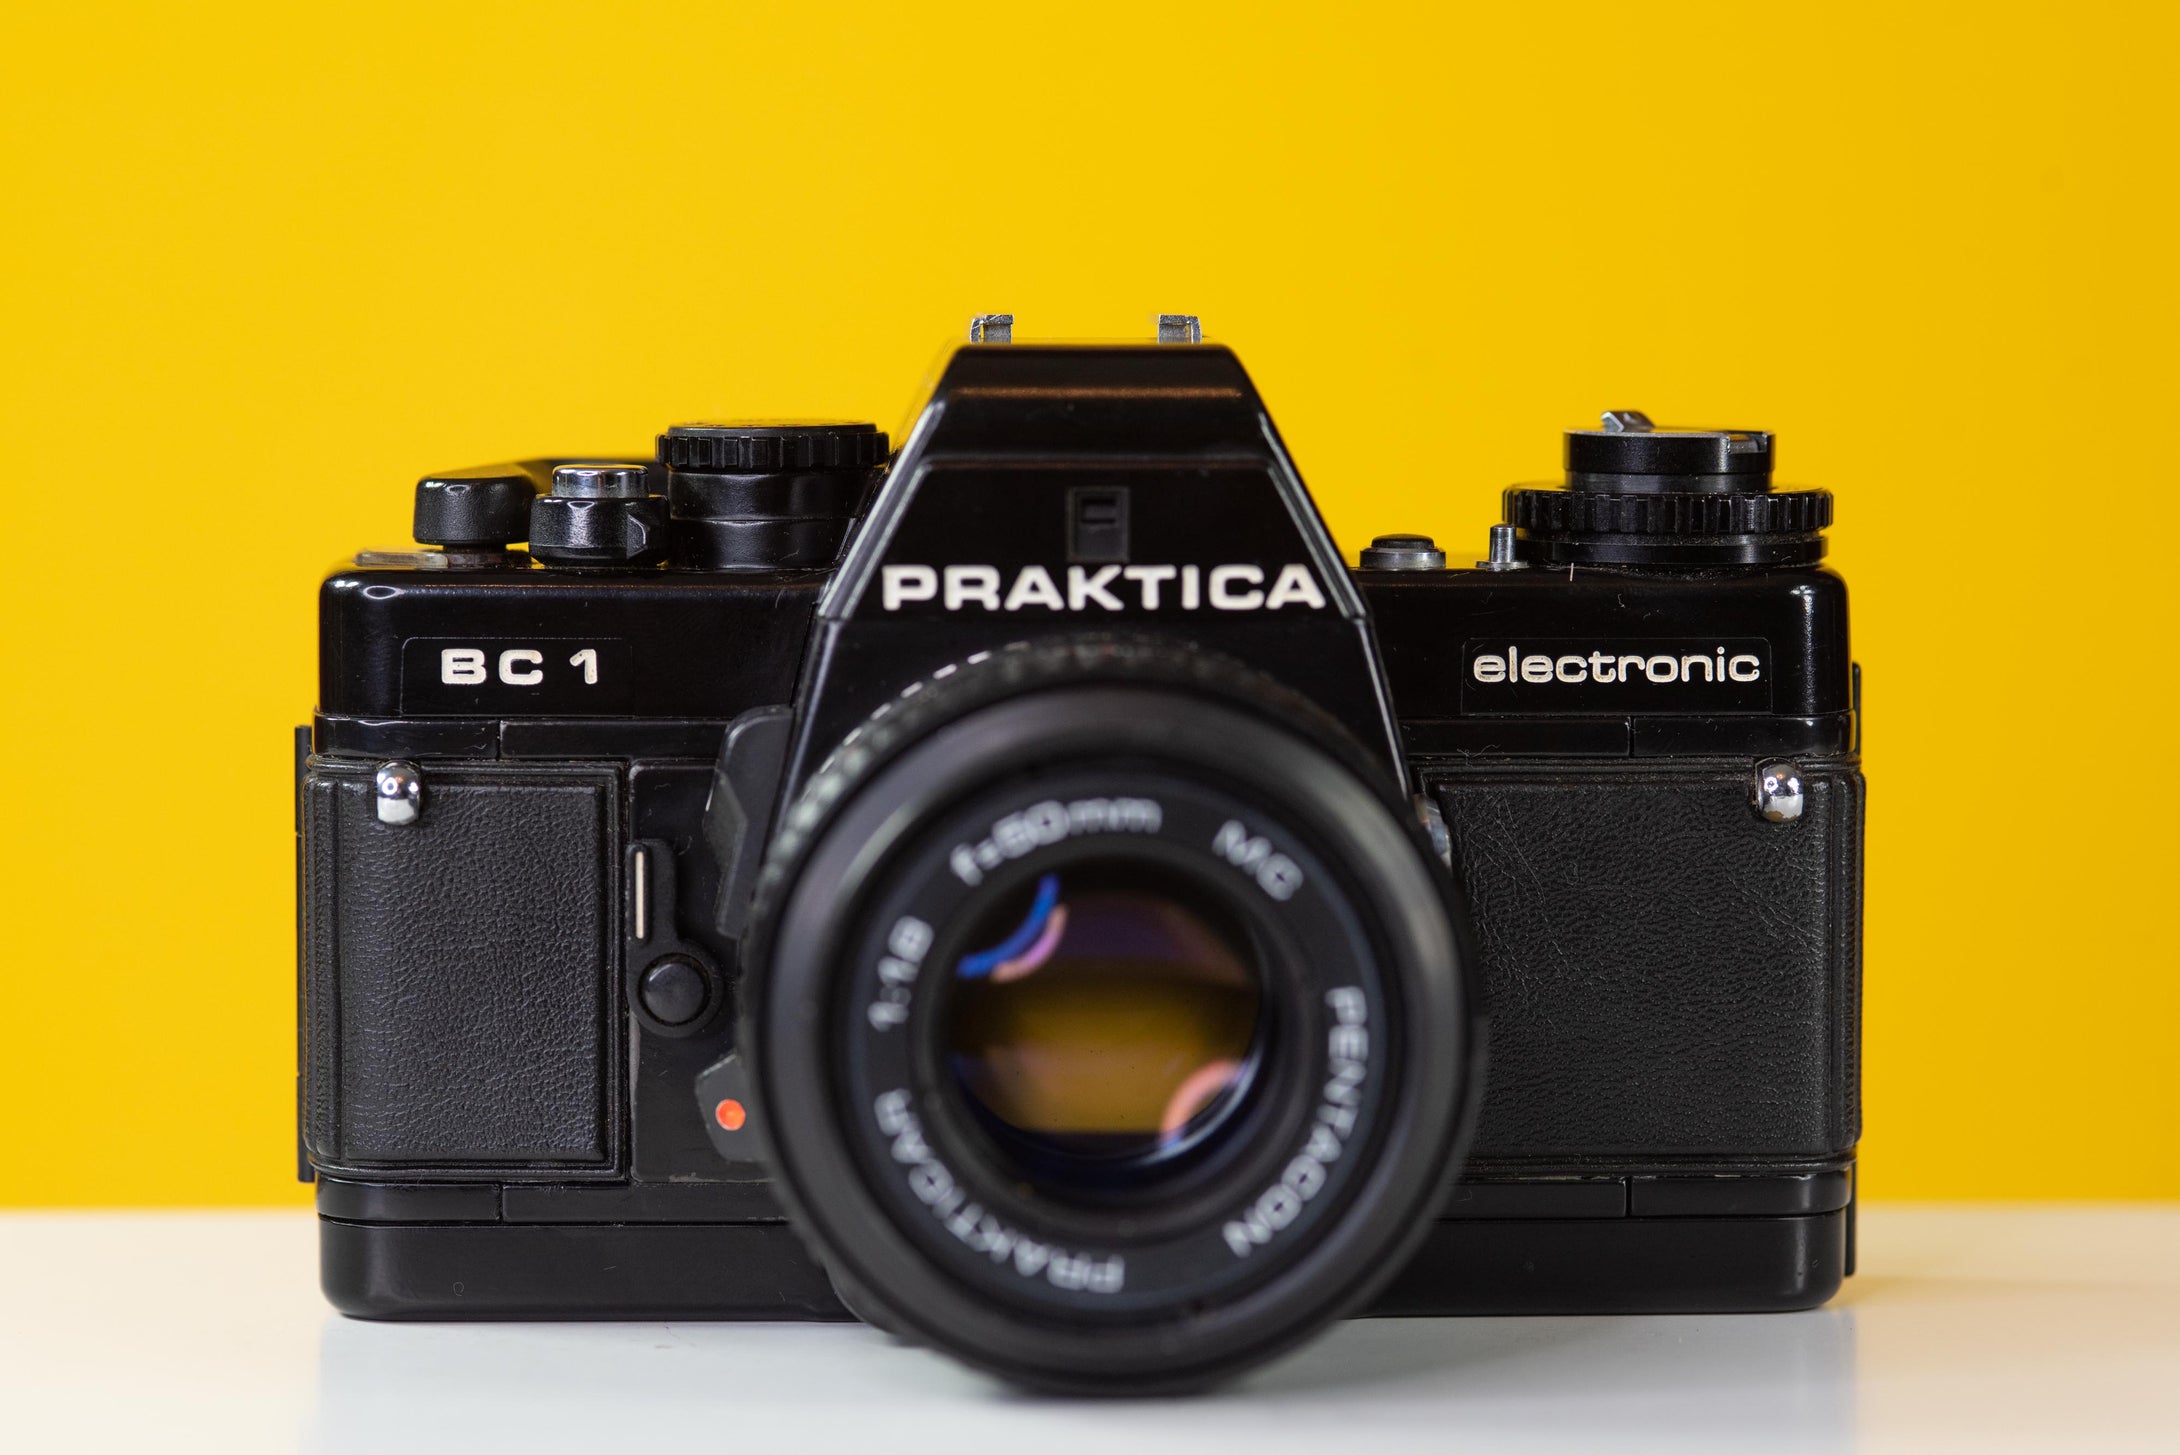 Praktica BC1 Electronic Vintage 35mm Film Camera with Pentacon 50mm f/1.8 Prime Lens